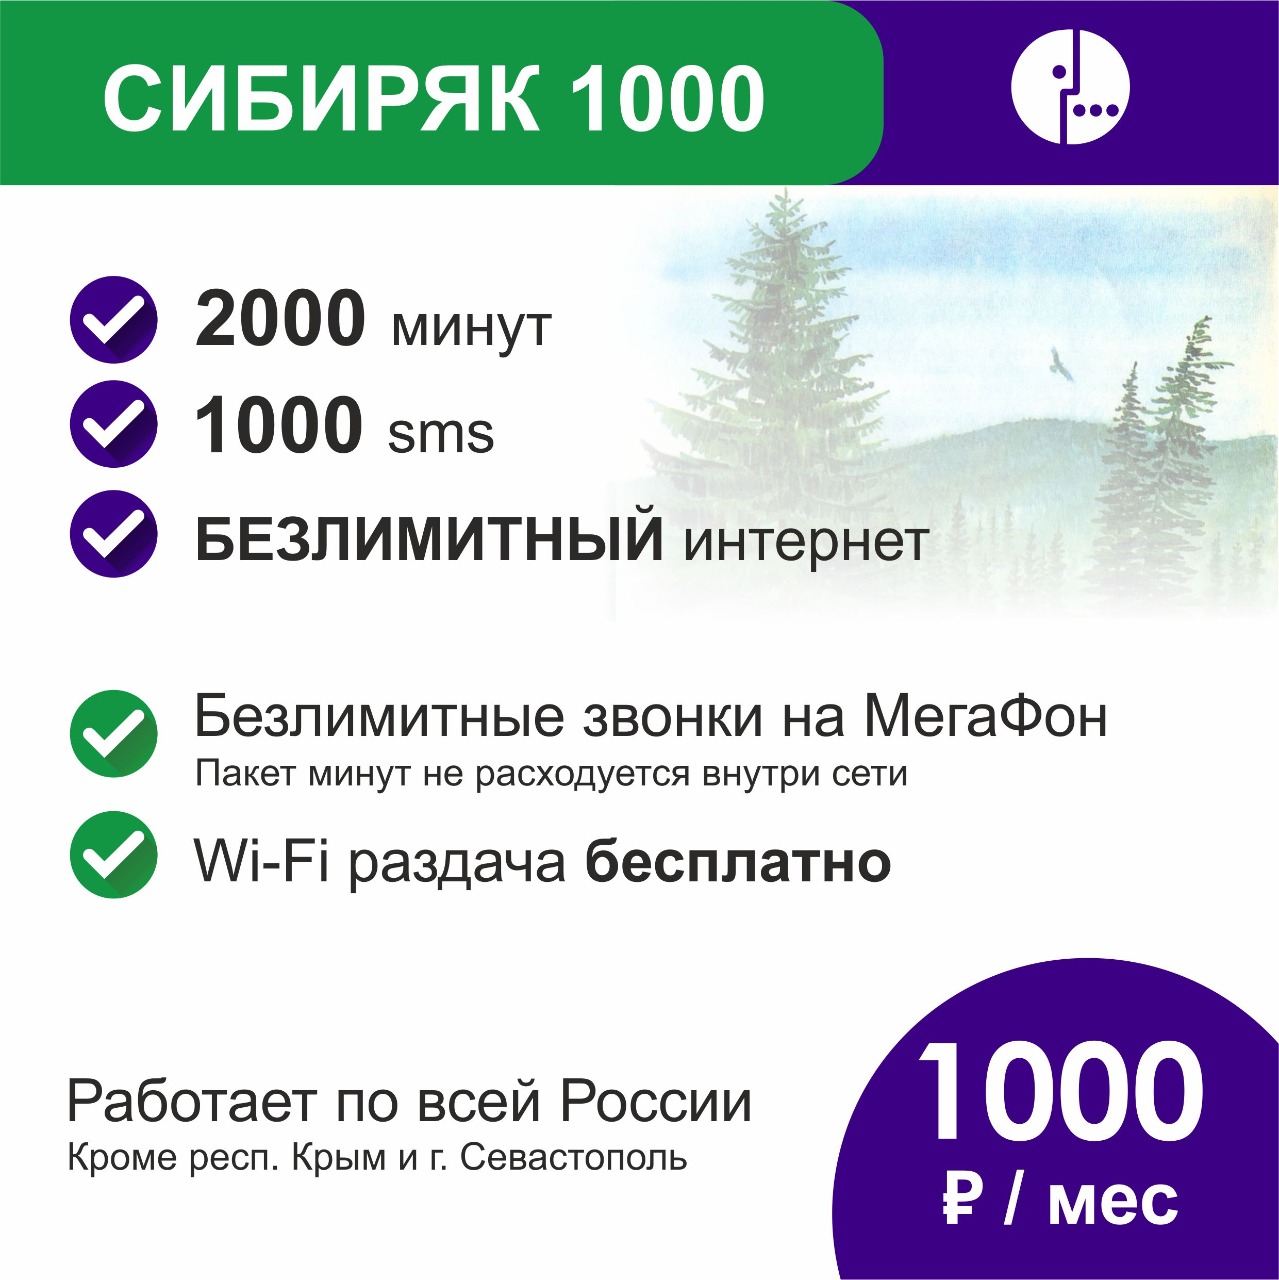 Саяногорск Инфо - whatsapp-image-2020-08-21-at-114742-1.jpeg, Скачано: 460